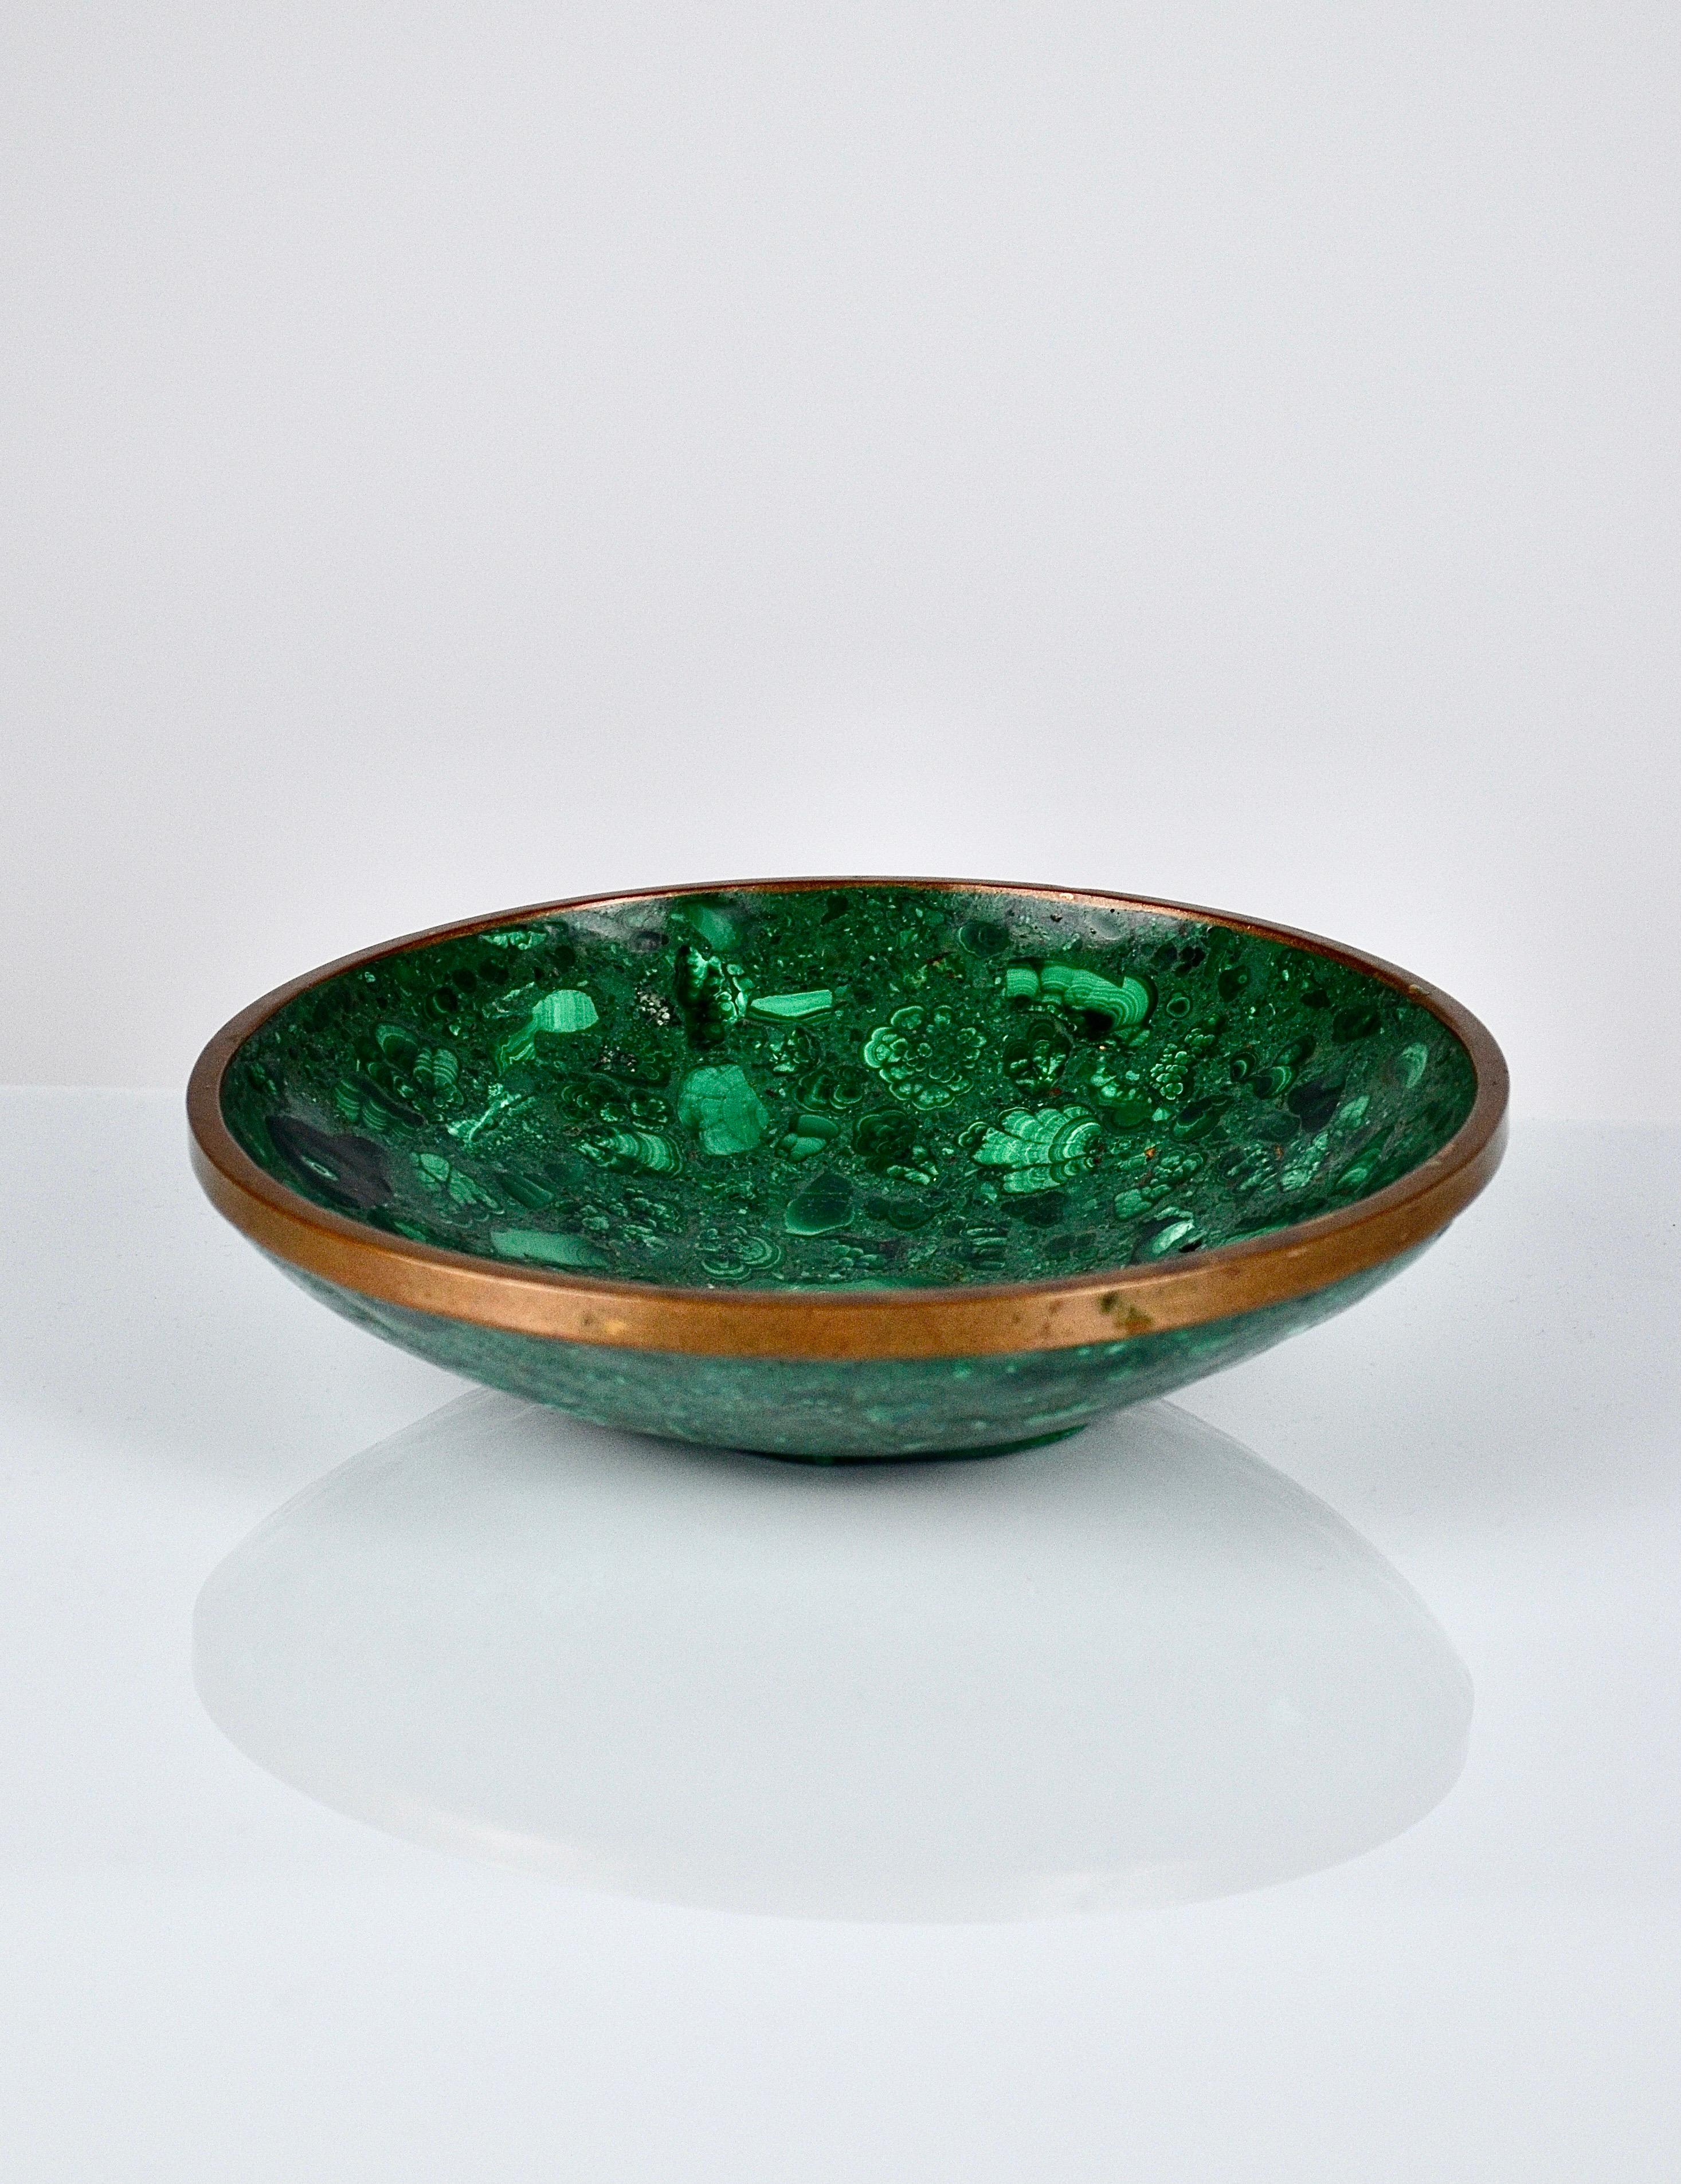 Marbled malachite monolith bowl with golden color rim
No crack.
Very elegant. Splendid color.
Diameter: 21 cm
Weight: 1036 g (2,28 ibs)